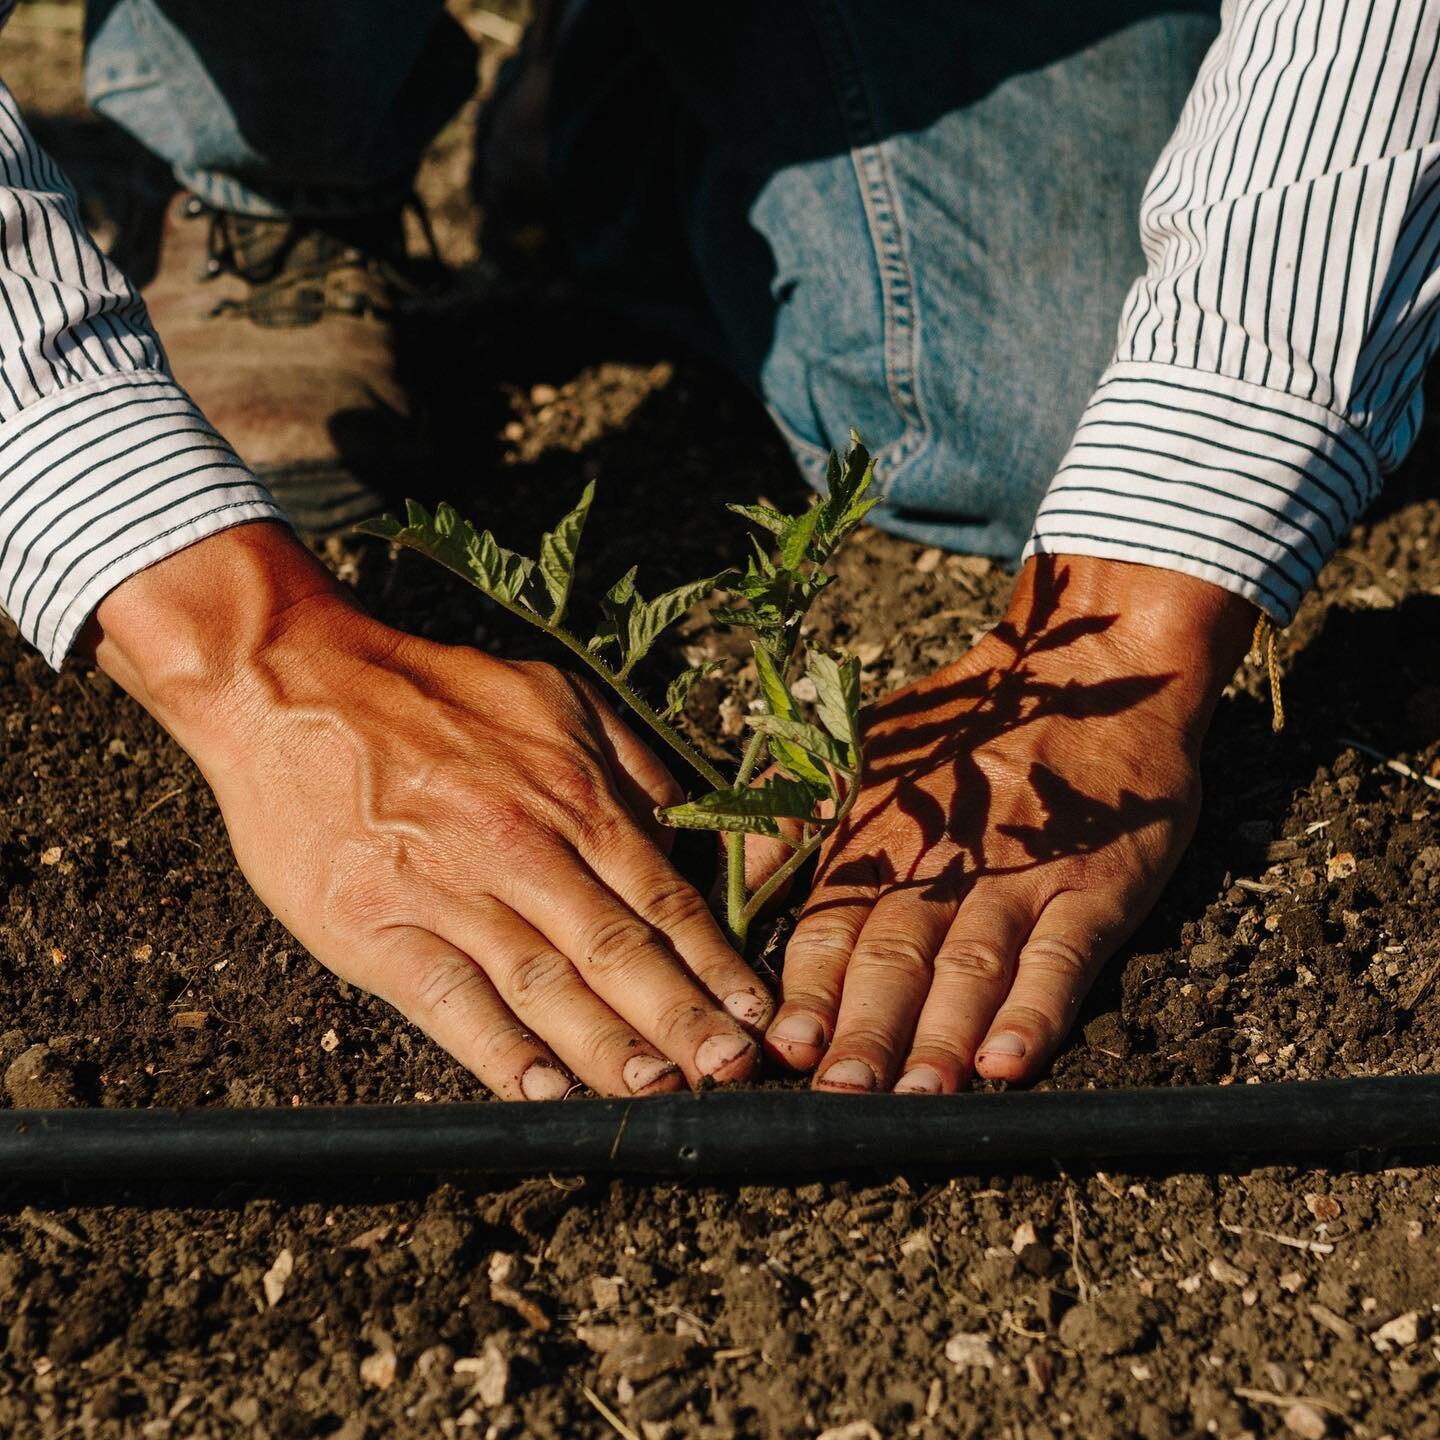 Soil prep ✔️ Seedlings sprouted ✔️
Planting ✔️
The official start to 🍅 season!

Photo: @patrickrecord
#organic
#farmtotable
#lifeonthefarm
#organictomatoes
#heirloomtomatoes 
#meyerlemons
#mandarinoranges
#avocados
#hassavocado
#ranchopalosverdes 
#